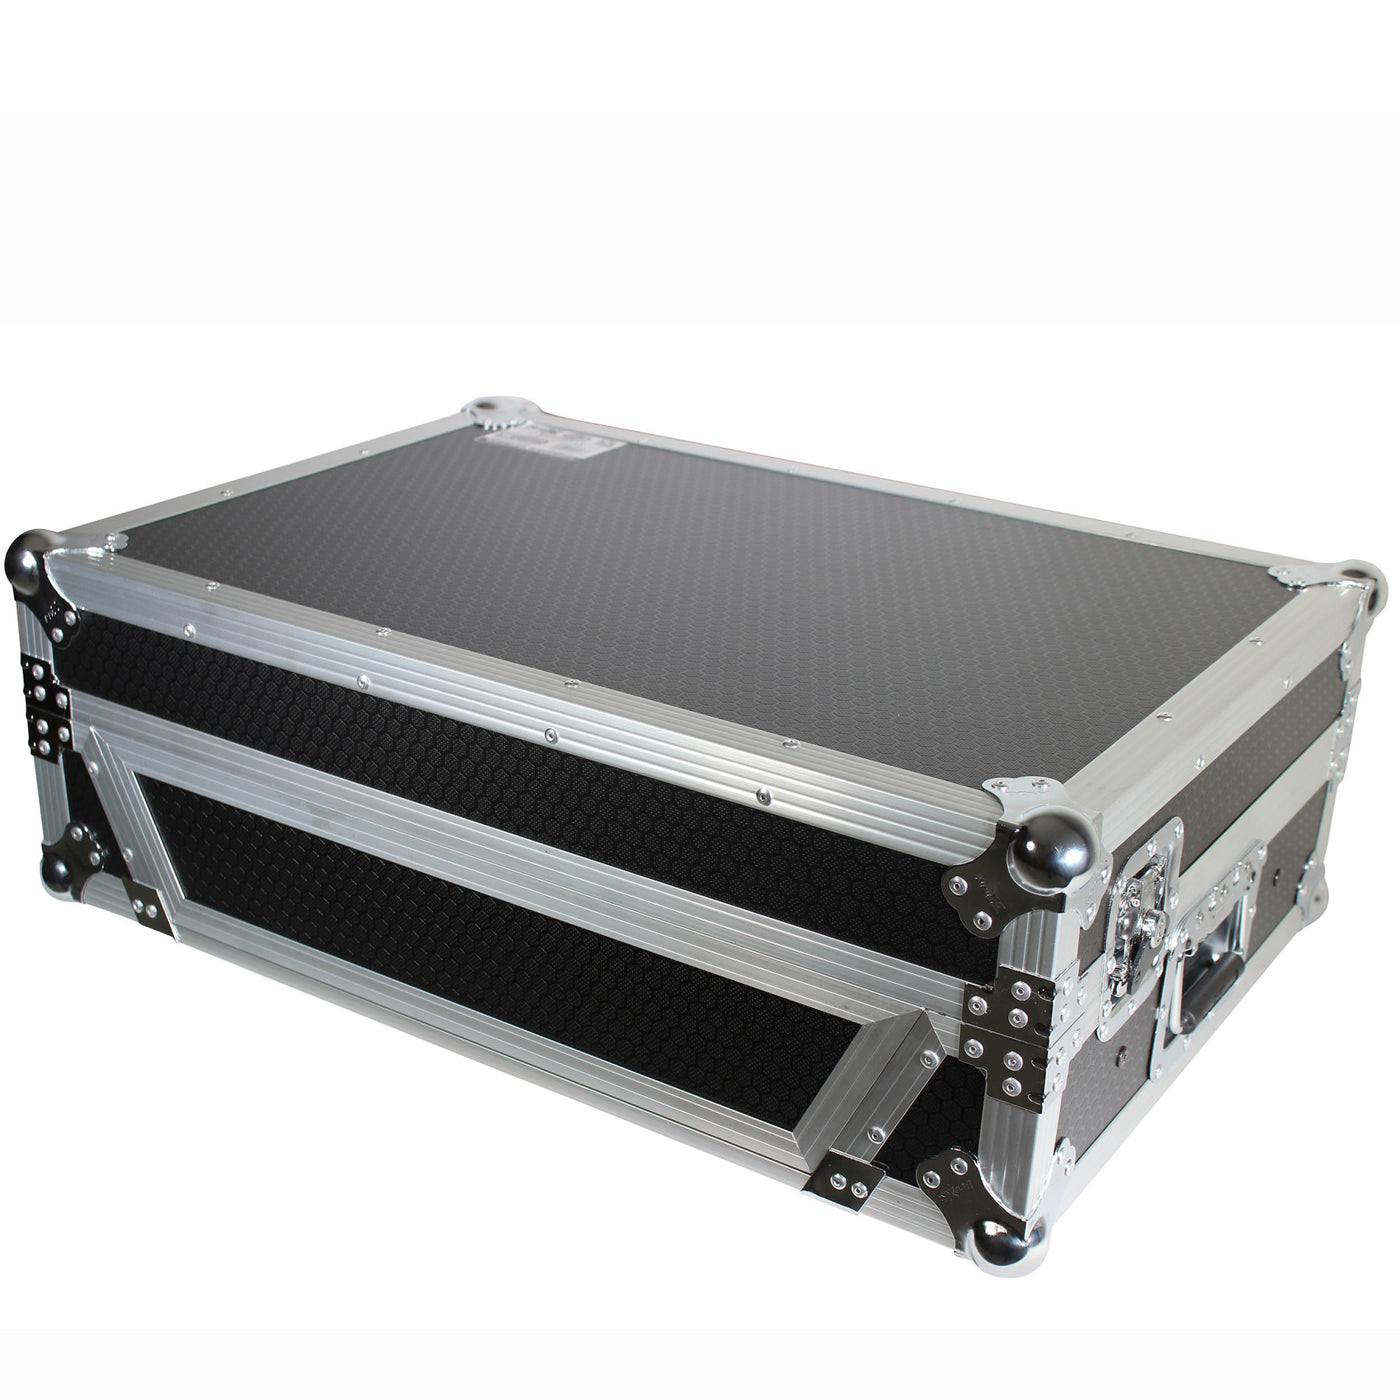 ProX XS-PRIME2LT ATA-300 Style Flight Case, For Denon PRIME 2 DJ Controller, With Laptop Shelf 1U Rack Space, Pro Audio Equipment Storage, Silver on Black